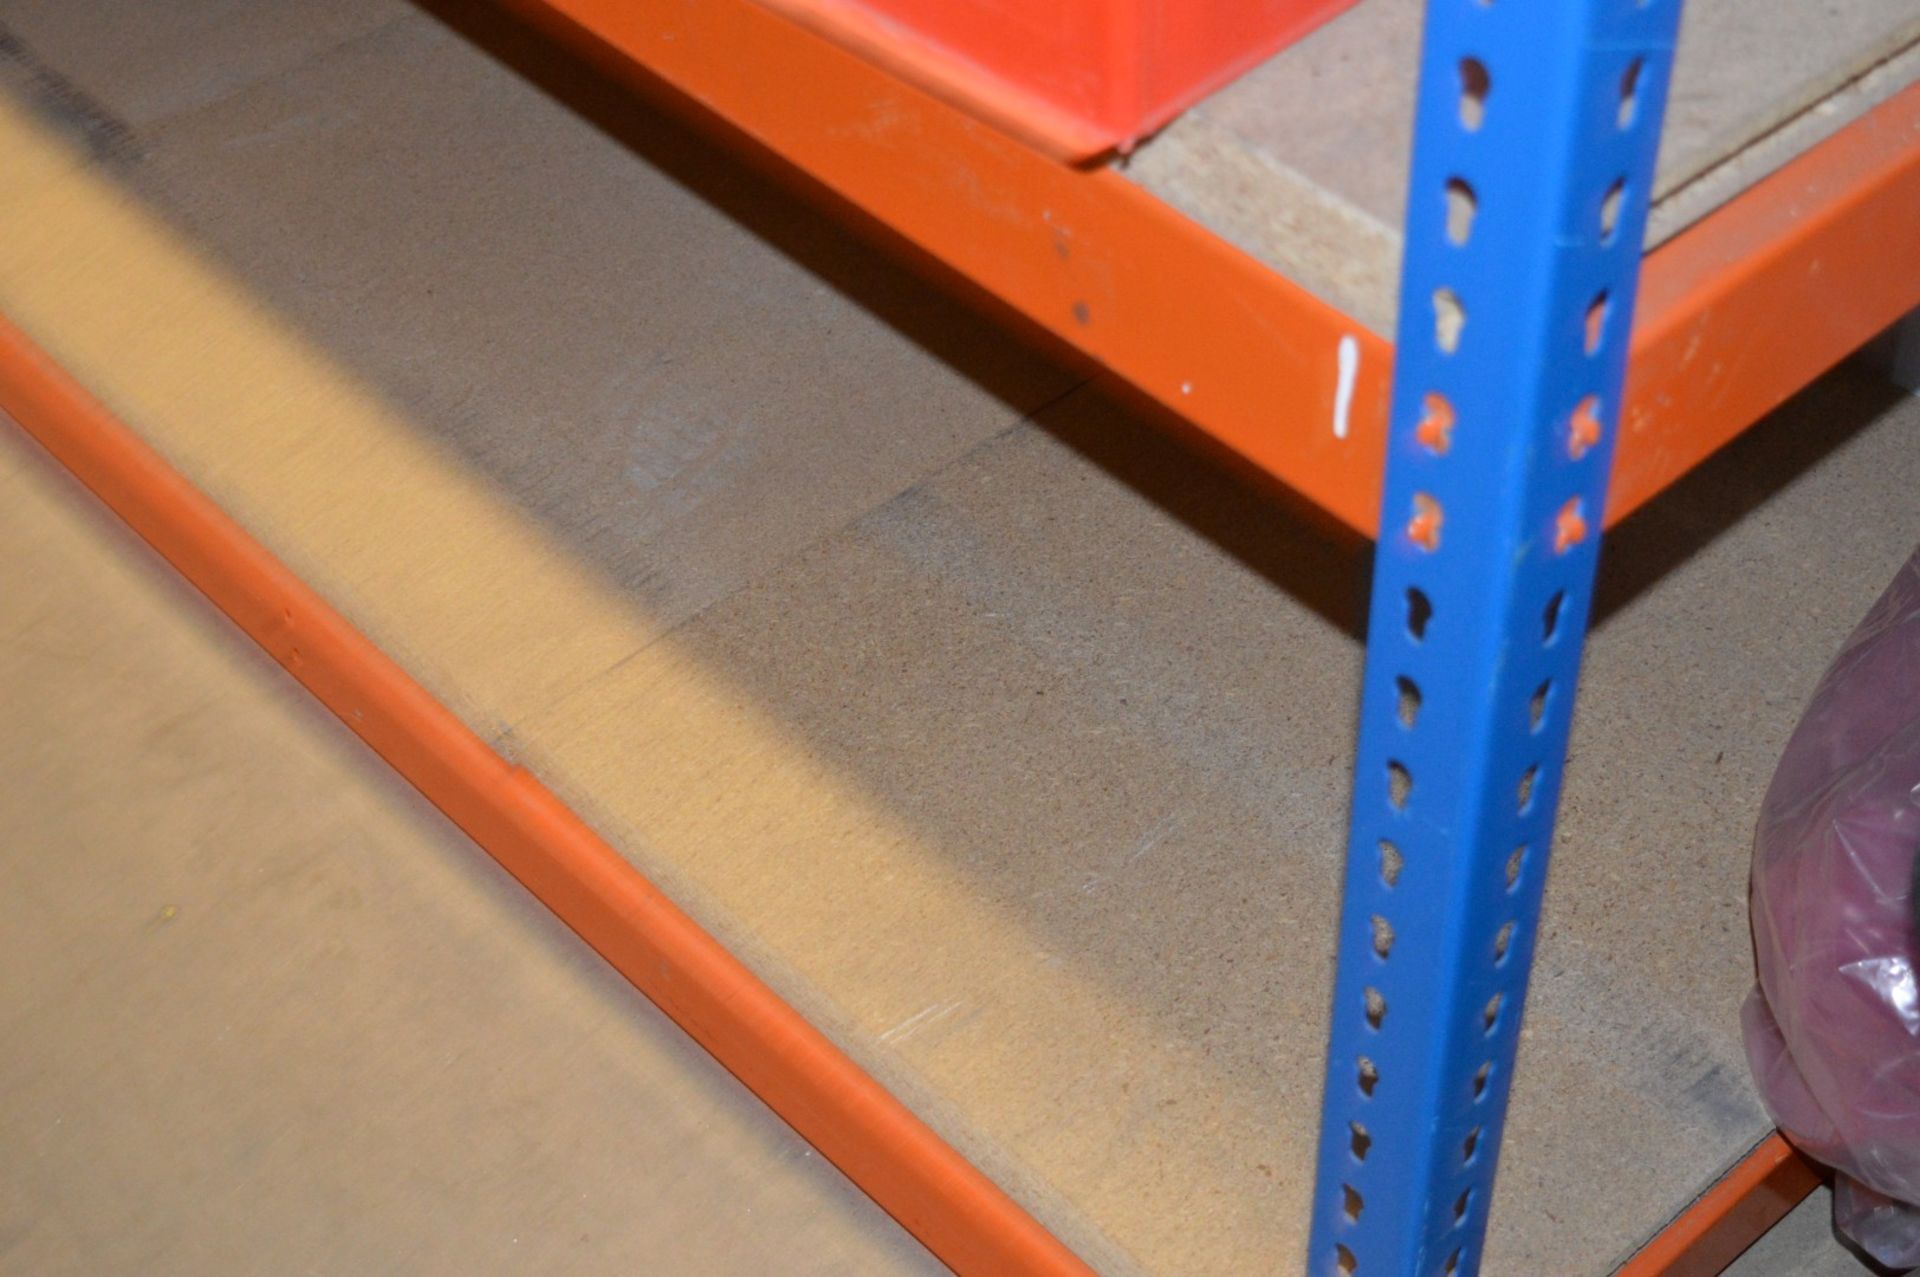 3 x Bays of Heavy Duty Rivet Storage Racking - Blue & Orange - Excellent Business Shelving - Image 4 of 5